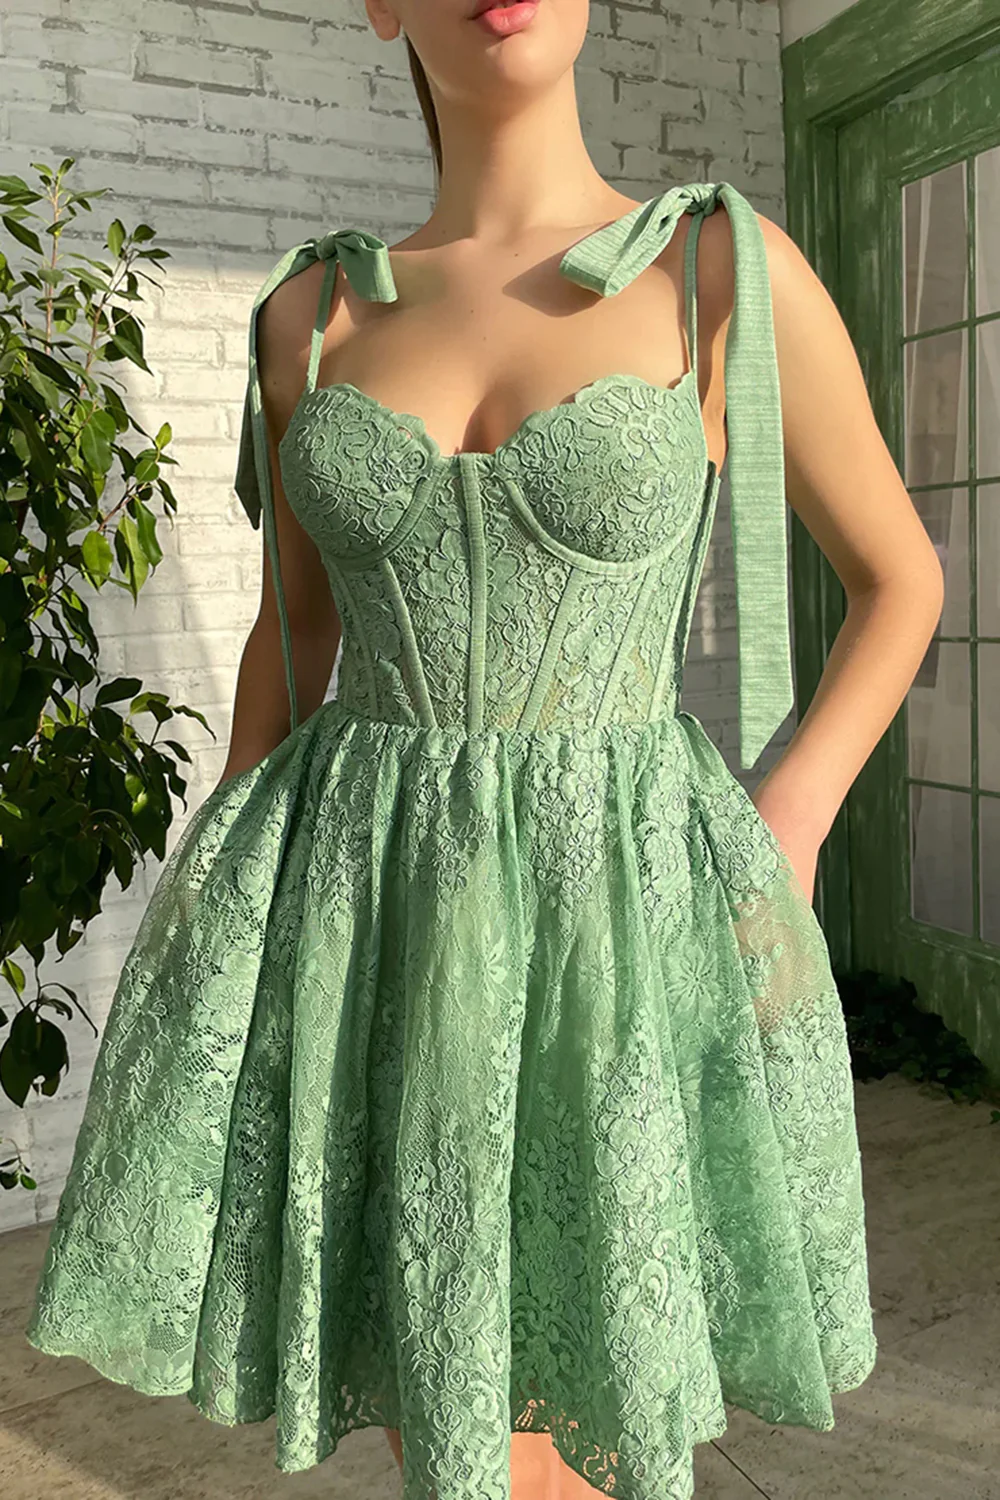 Green Sweetheart Lace  Homecoming Dress  SH578